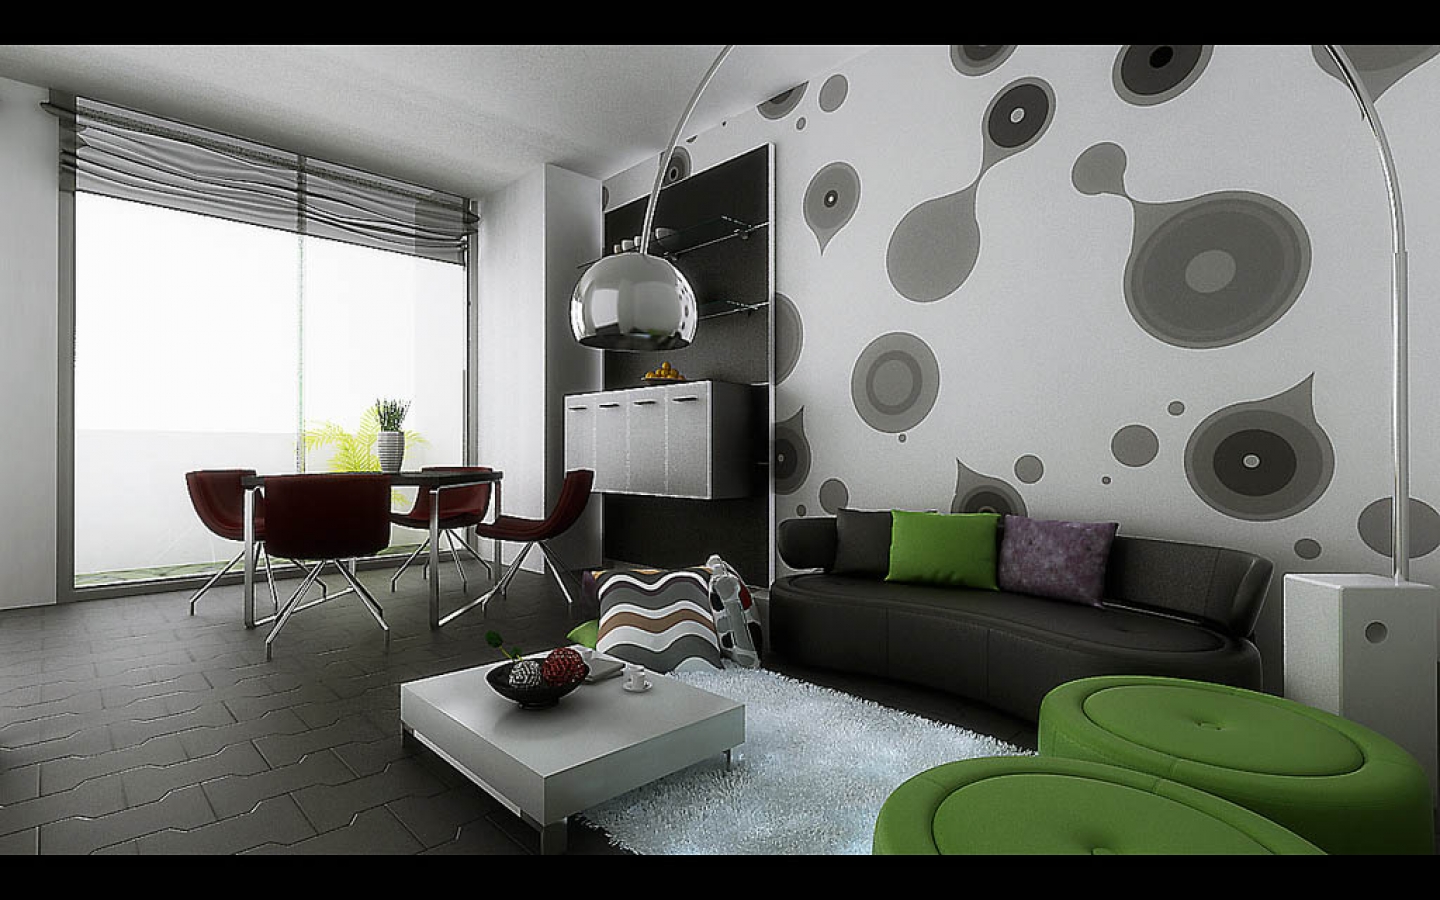  interiordesignforhouses com living room living room wall living